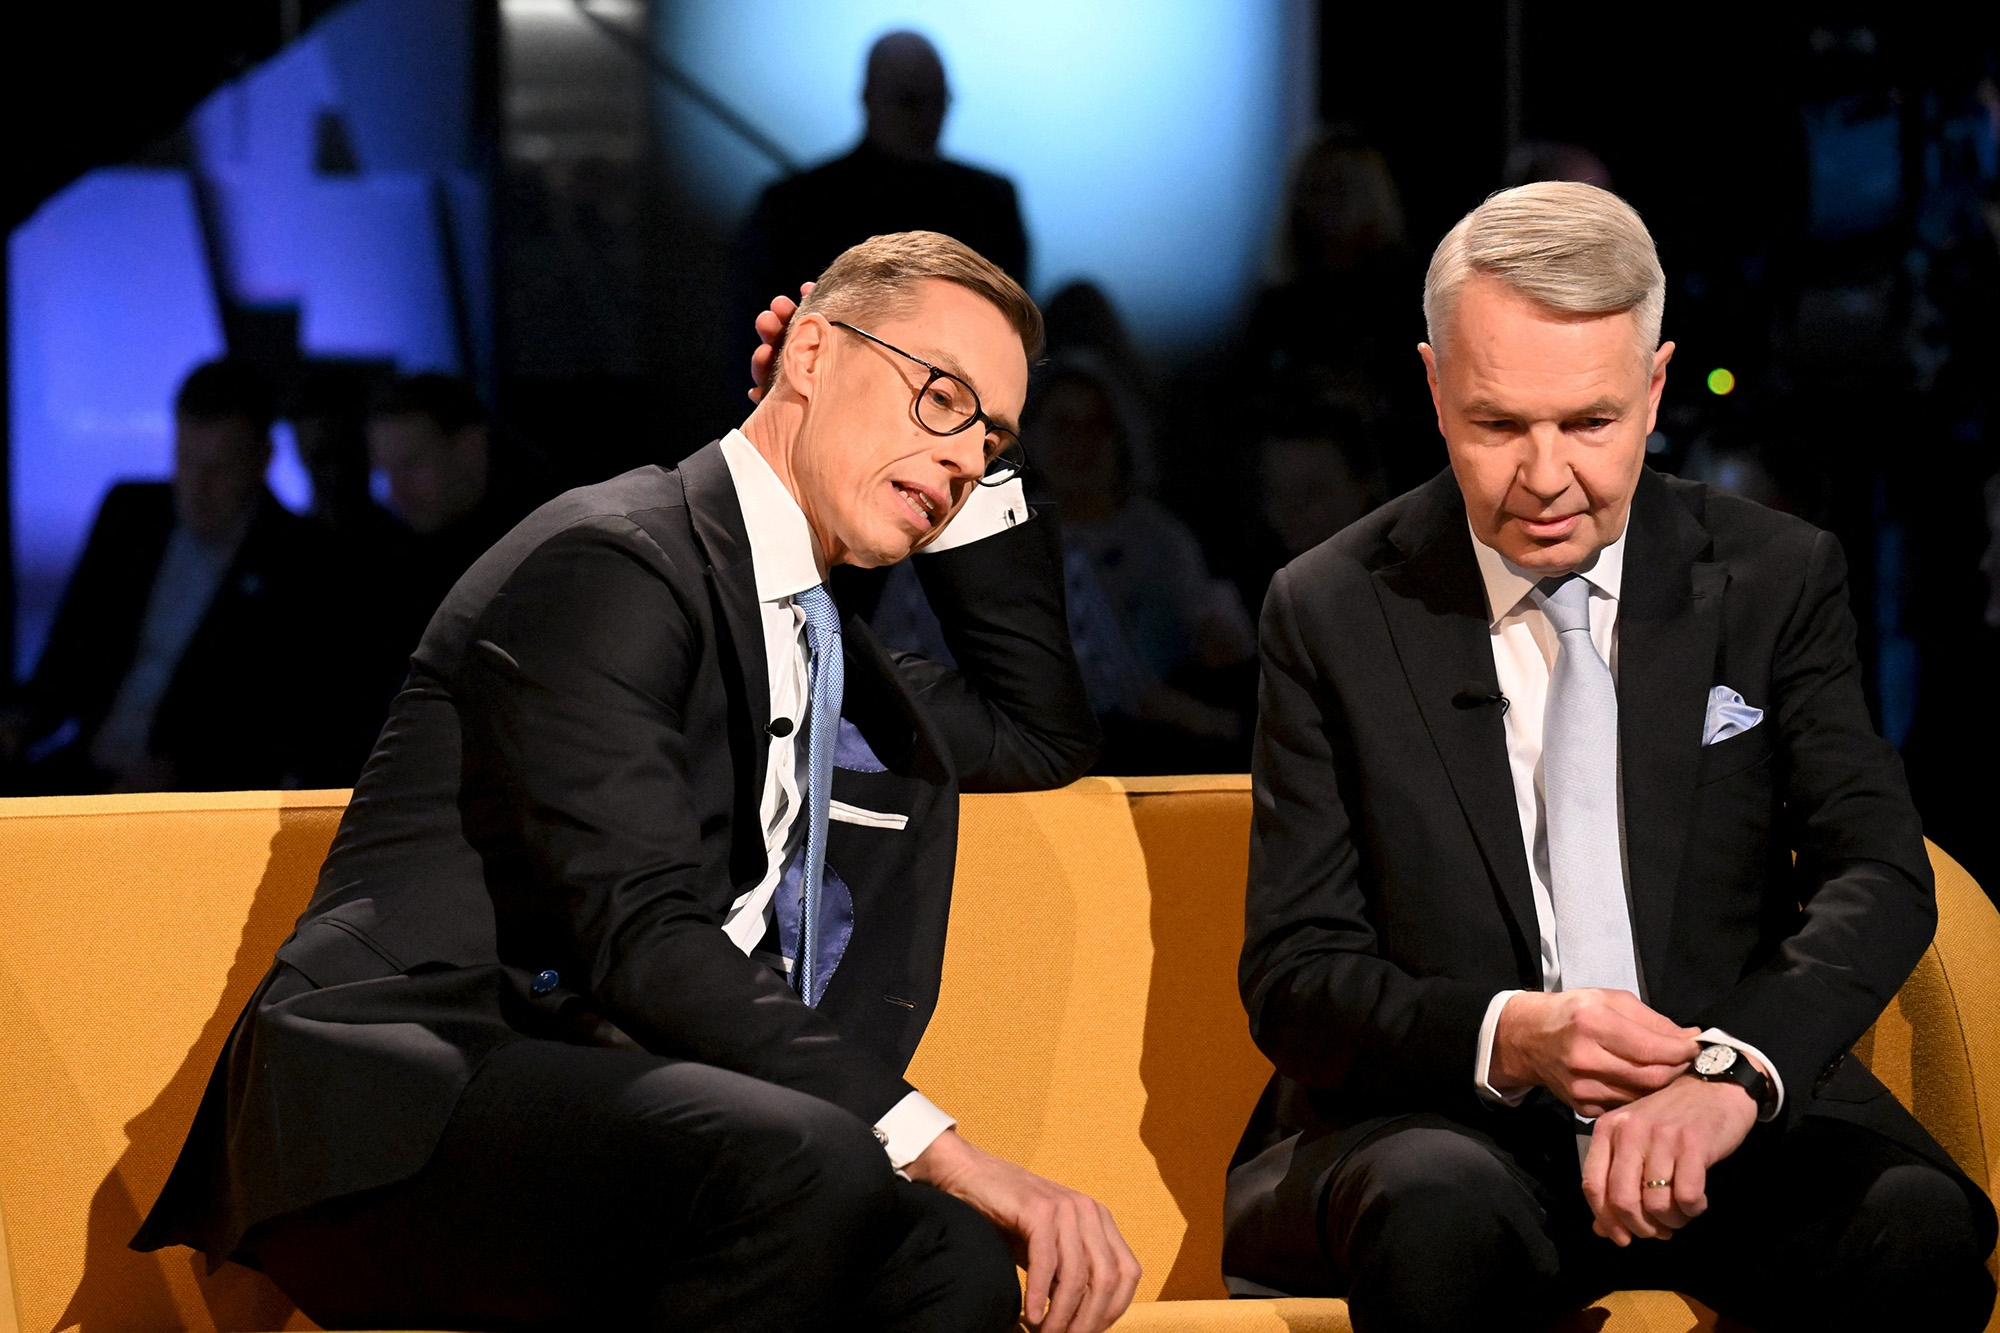 Pekka Haavisto und Alexander Stubb bei einer TV-Wahldebatte am 8. Februar in Helsinki (Bild: Jussi Nukari/Lehtikuva/AFP)